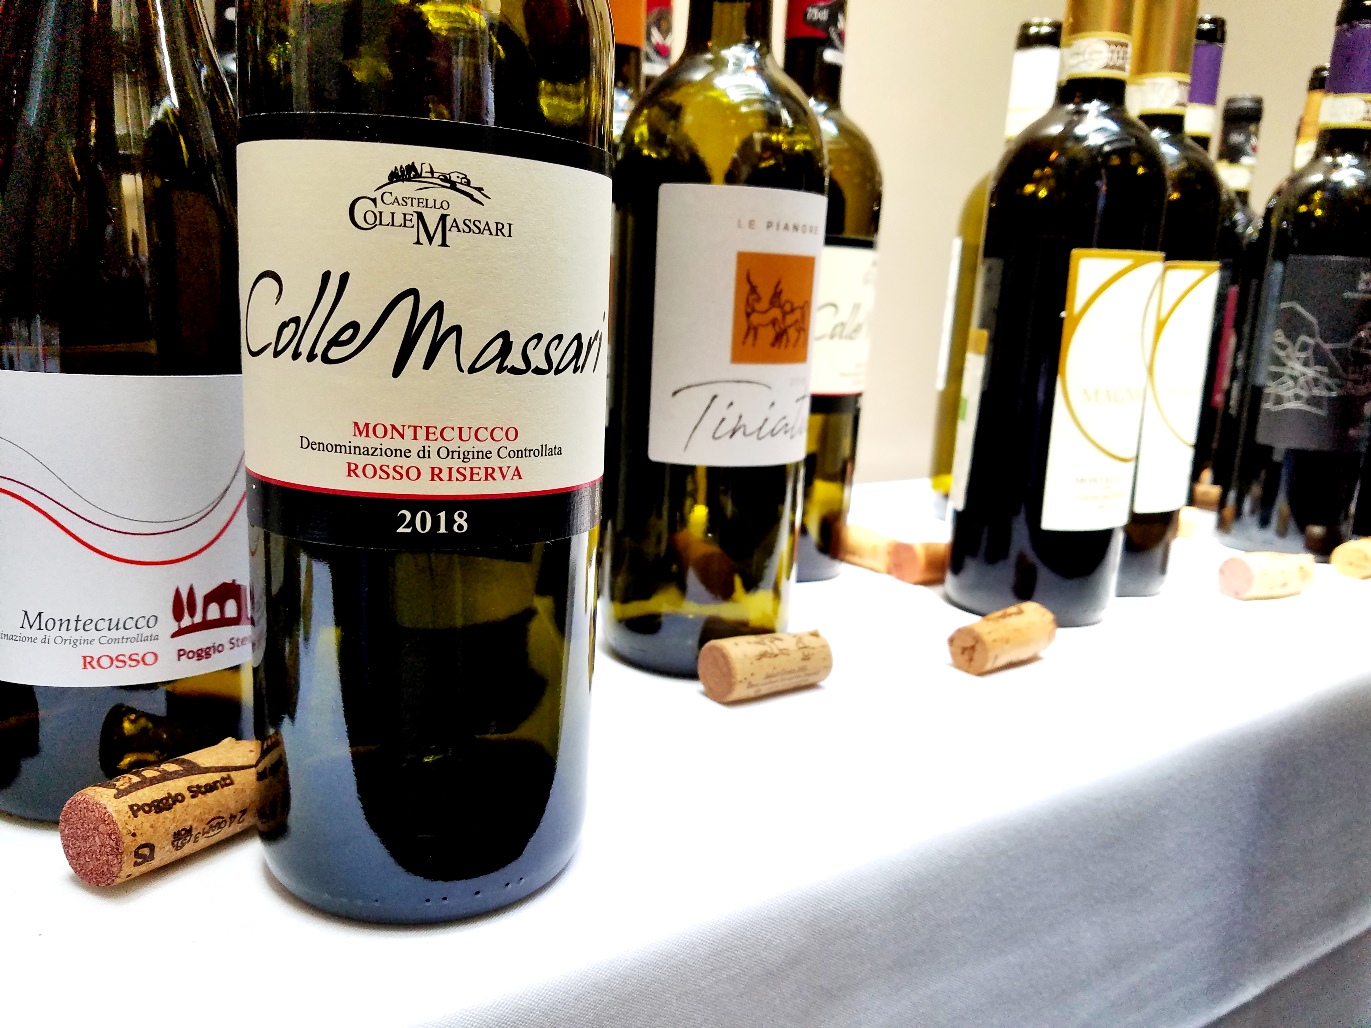 Castello ColleMassari, ColleMassari Montecucco Rosso Riserva 2018, Tuscany, Italy, Wine Casual